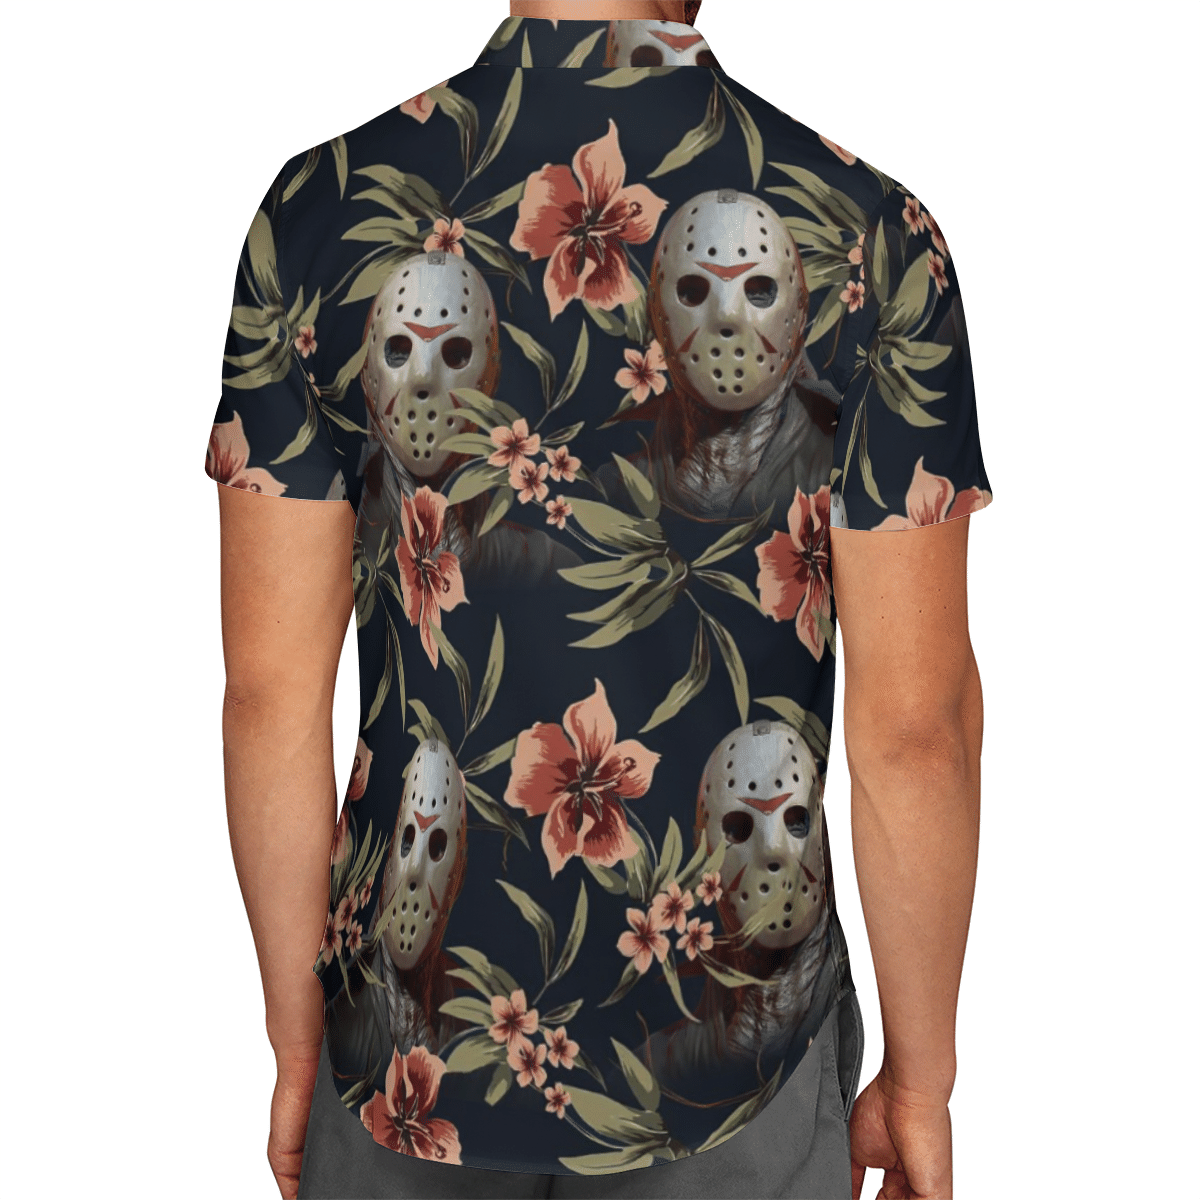 Jason Voorhees Hawaii shirt and short 2